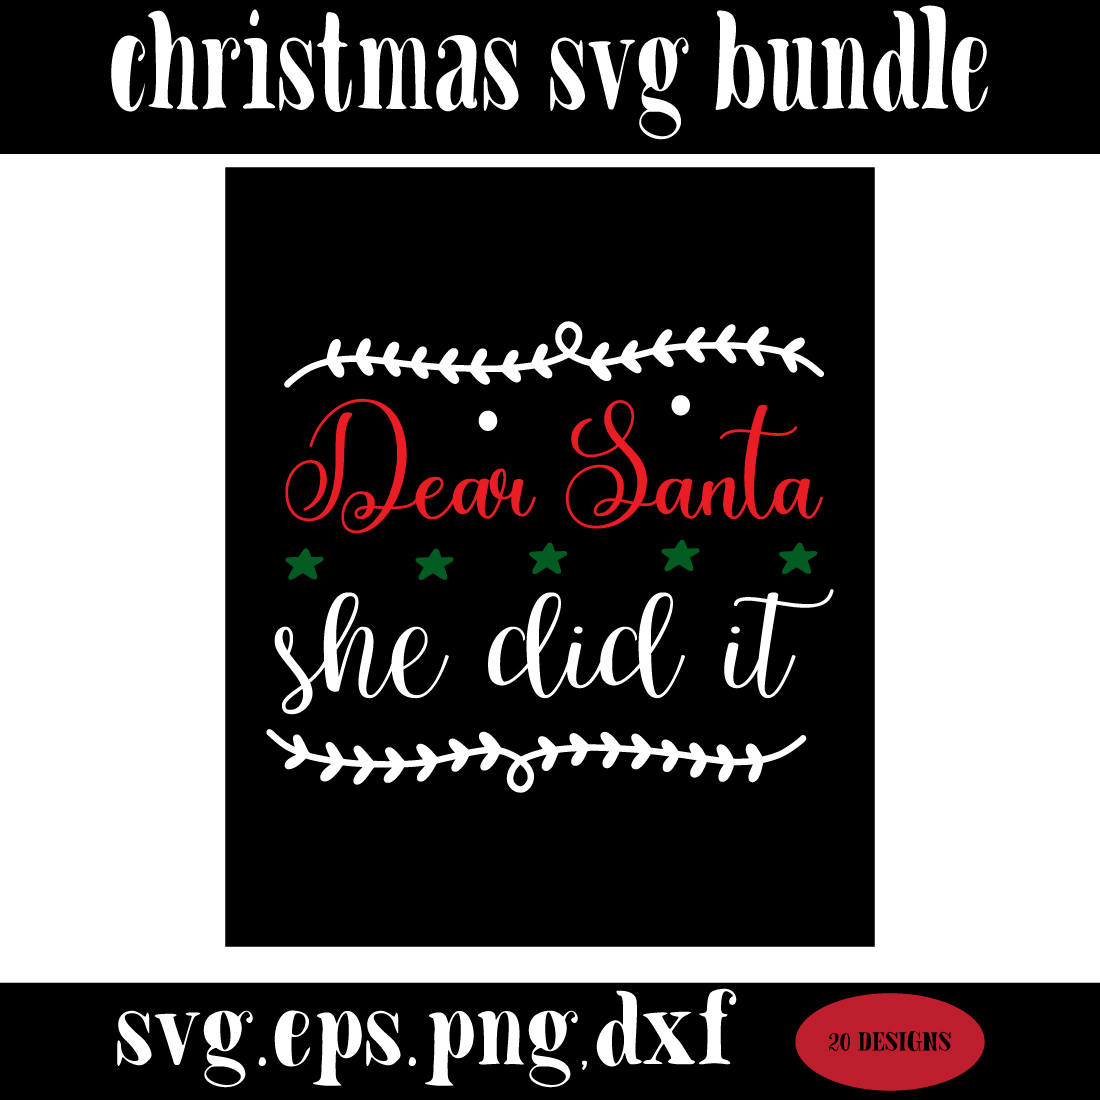 Christmas svg design bundle preview image.